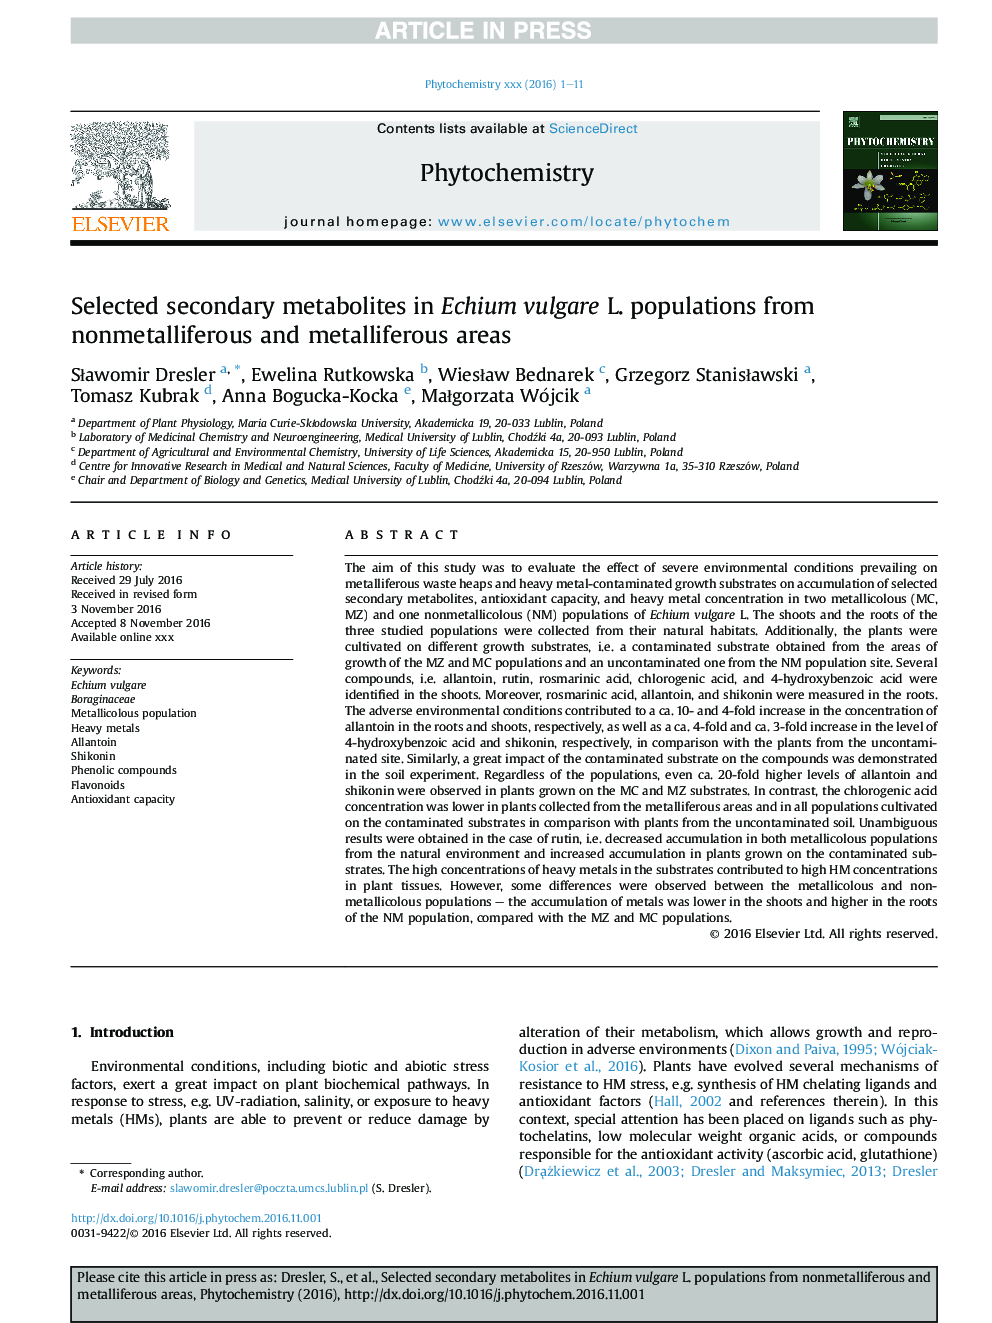 Selected secondary metabolites in Echium vulgare L. populations from nonmetalliferous and metalliferous areas